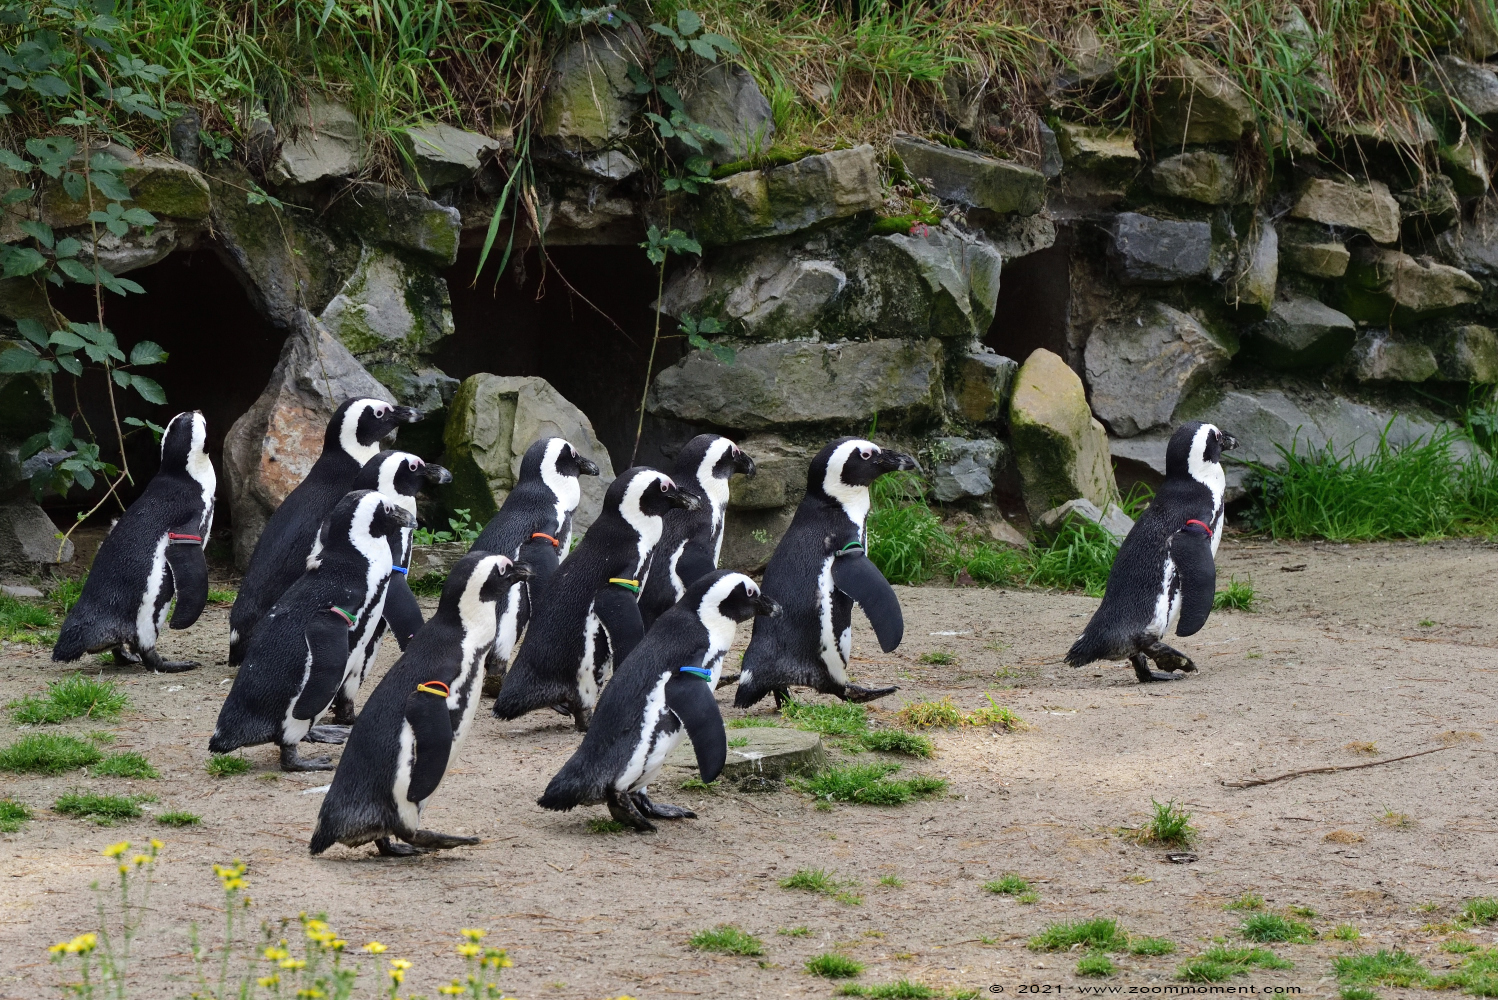 Afrikaanse pinguin of zwartvoetpinguïn ( Spheniscus demersus ) African penguin
Schlüsselwörter: Safaripark Beekse Bergen Afrikaanse pinguin zwartvoetpinguïn Spheniscus demersus African penguin